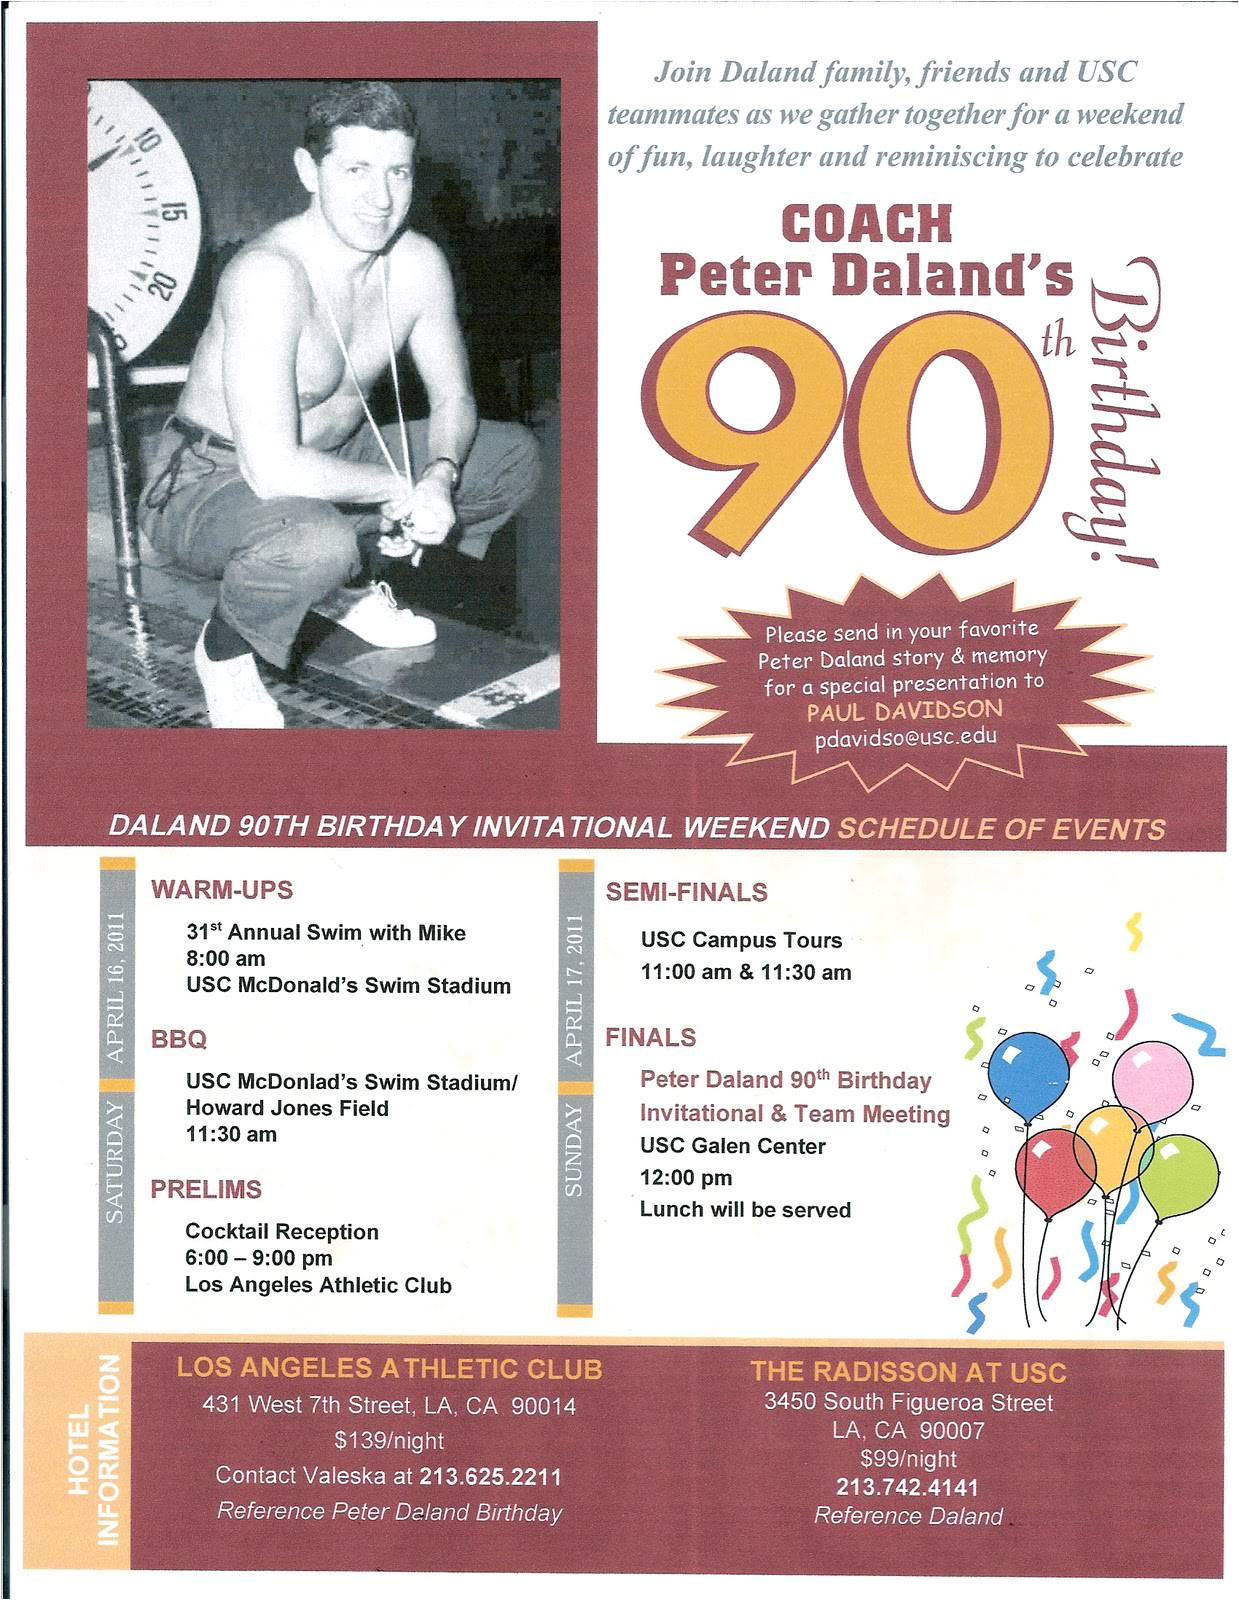 90th birthday party invitations